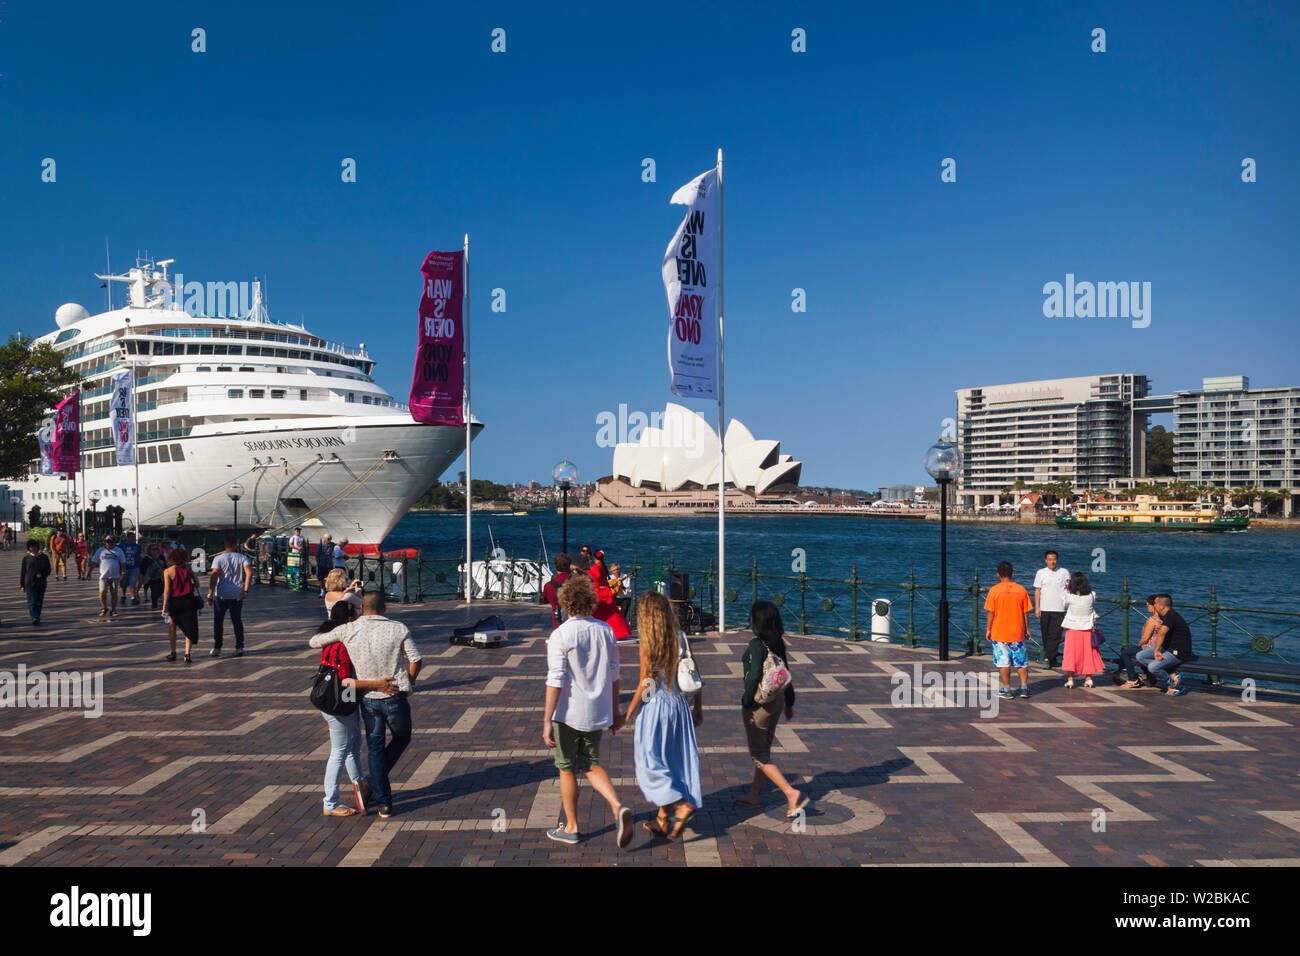 Australia, New South Wales, NSW, Sydney, Circular Quay and cruiseship Stock Photo